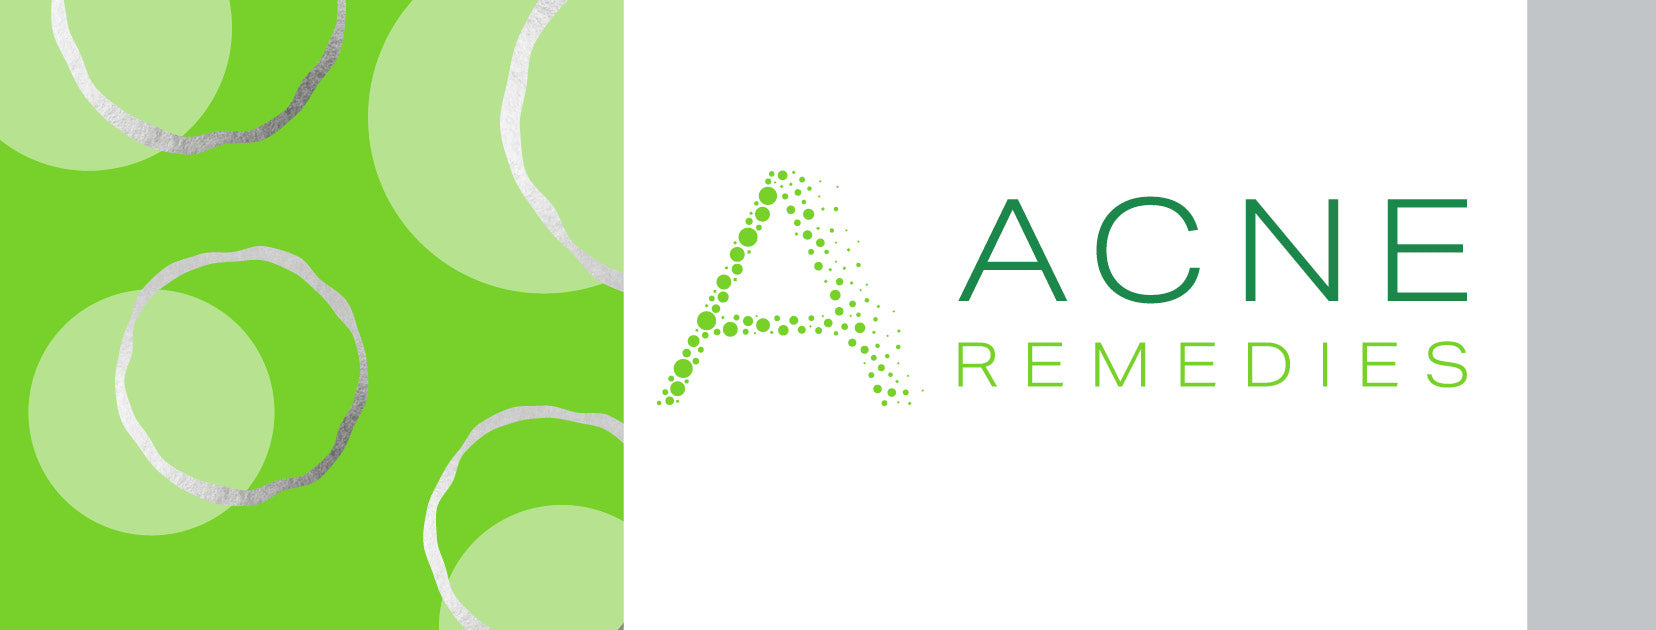 Acne Remedies - Cleansers & Scrubs